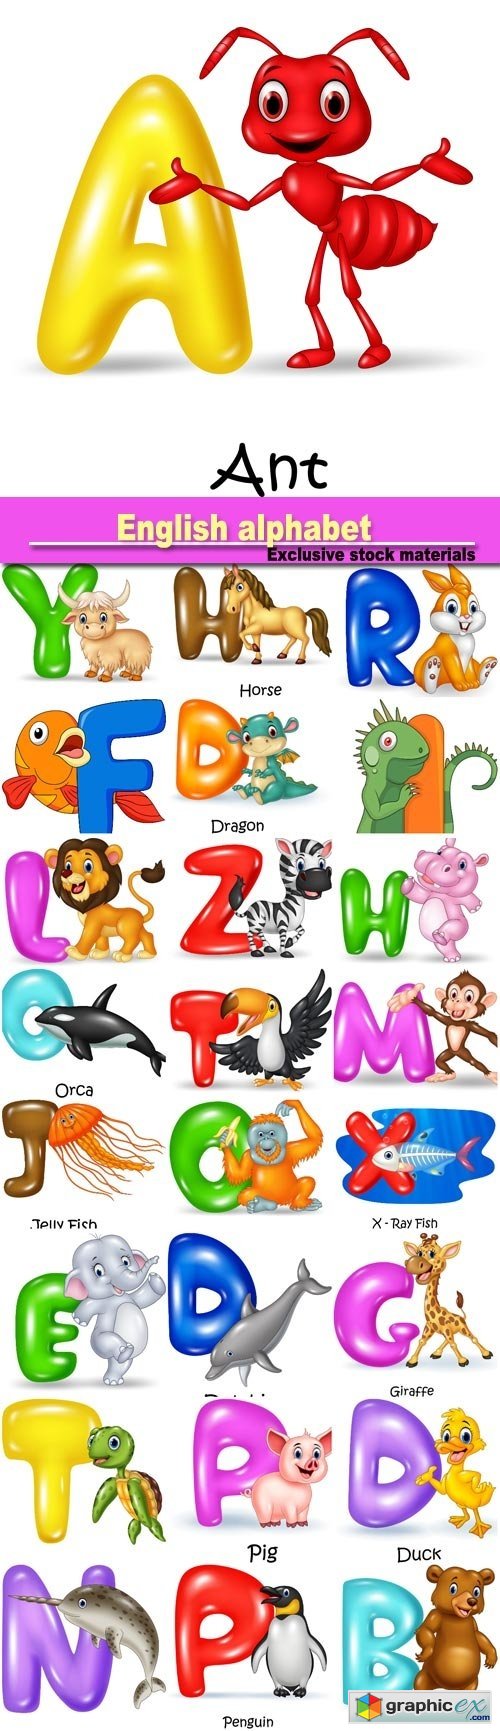 English alphabet with cartoon animals